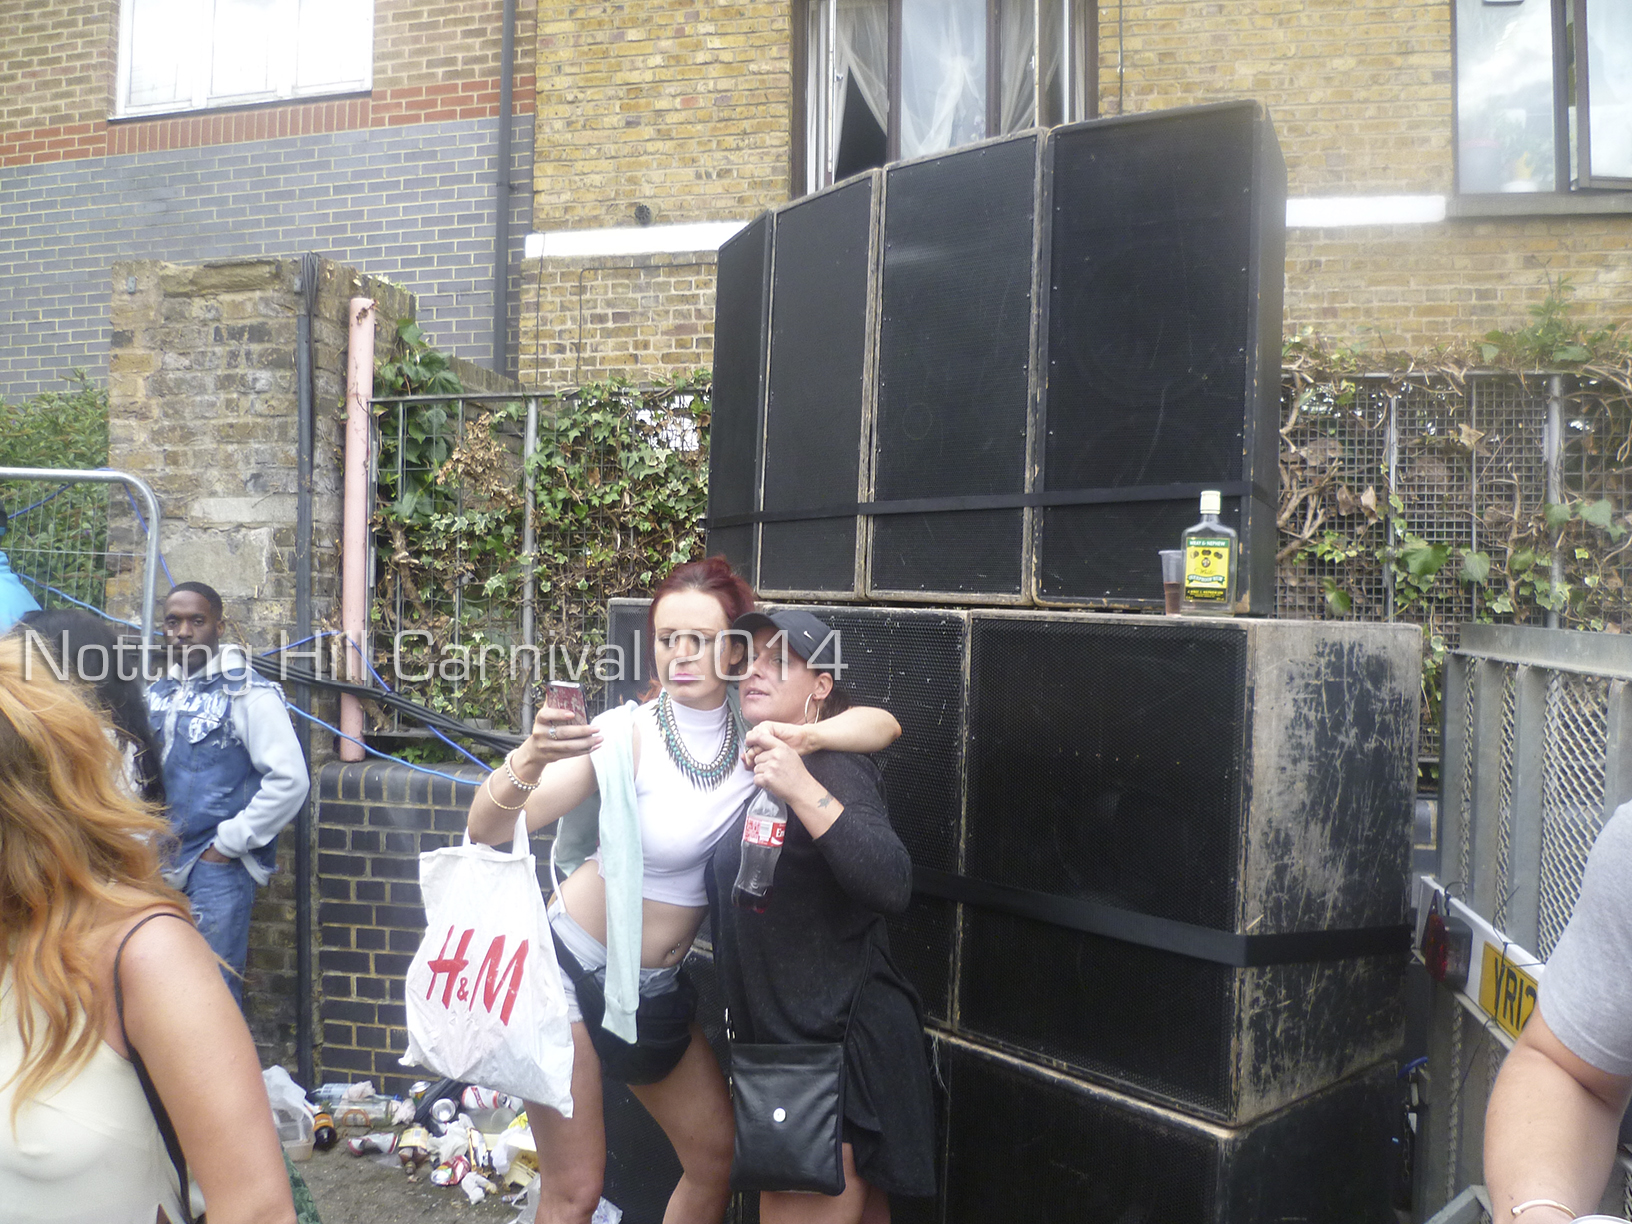 Notting-Hill-Carnival-2014-Street-Sound-System-25